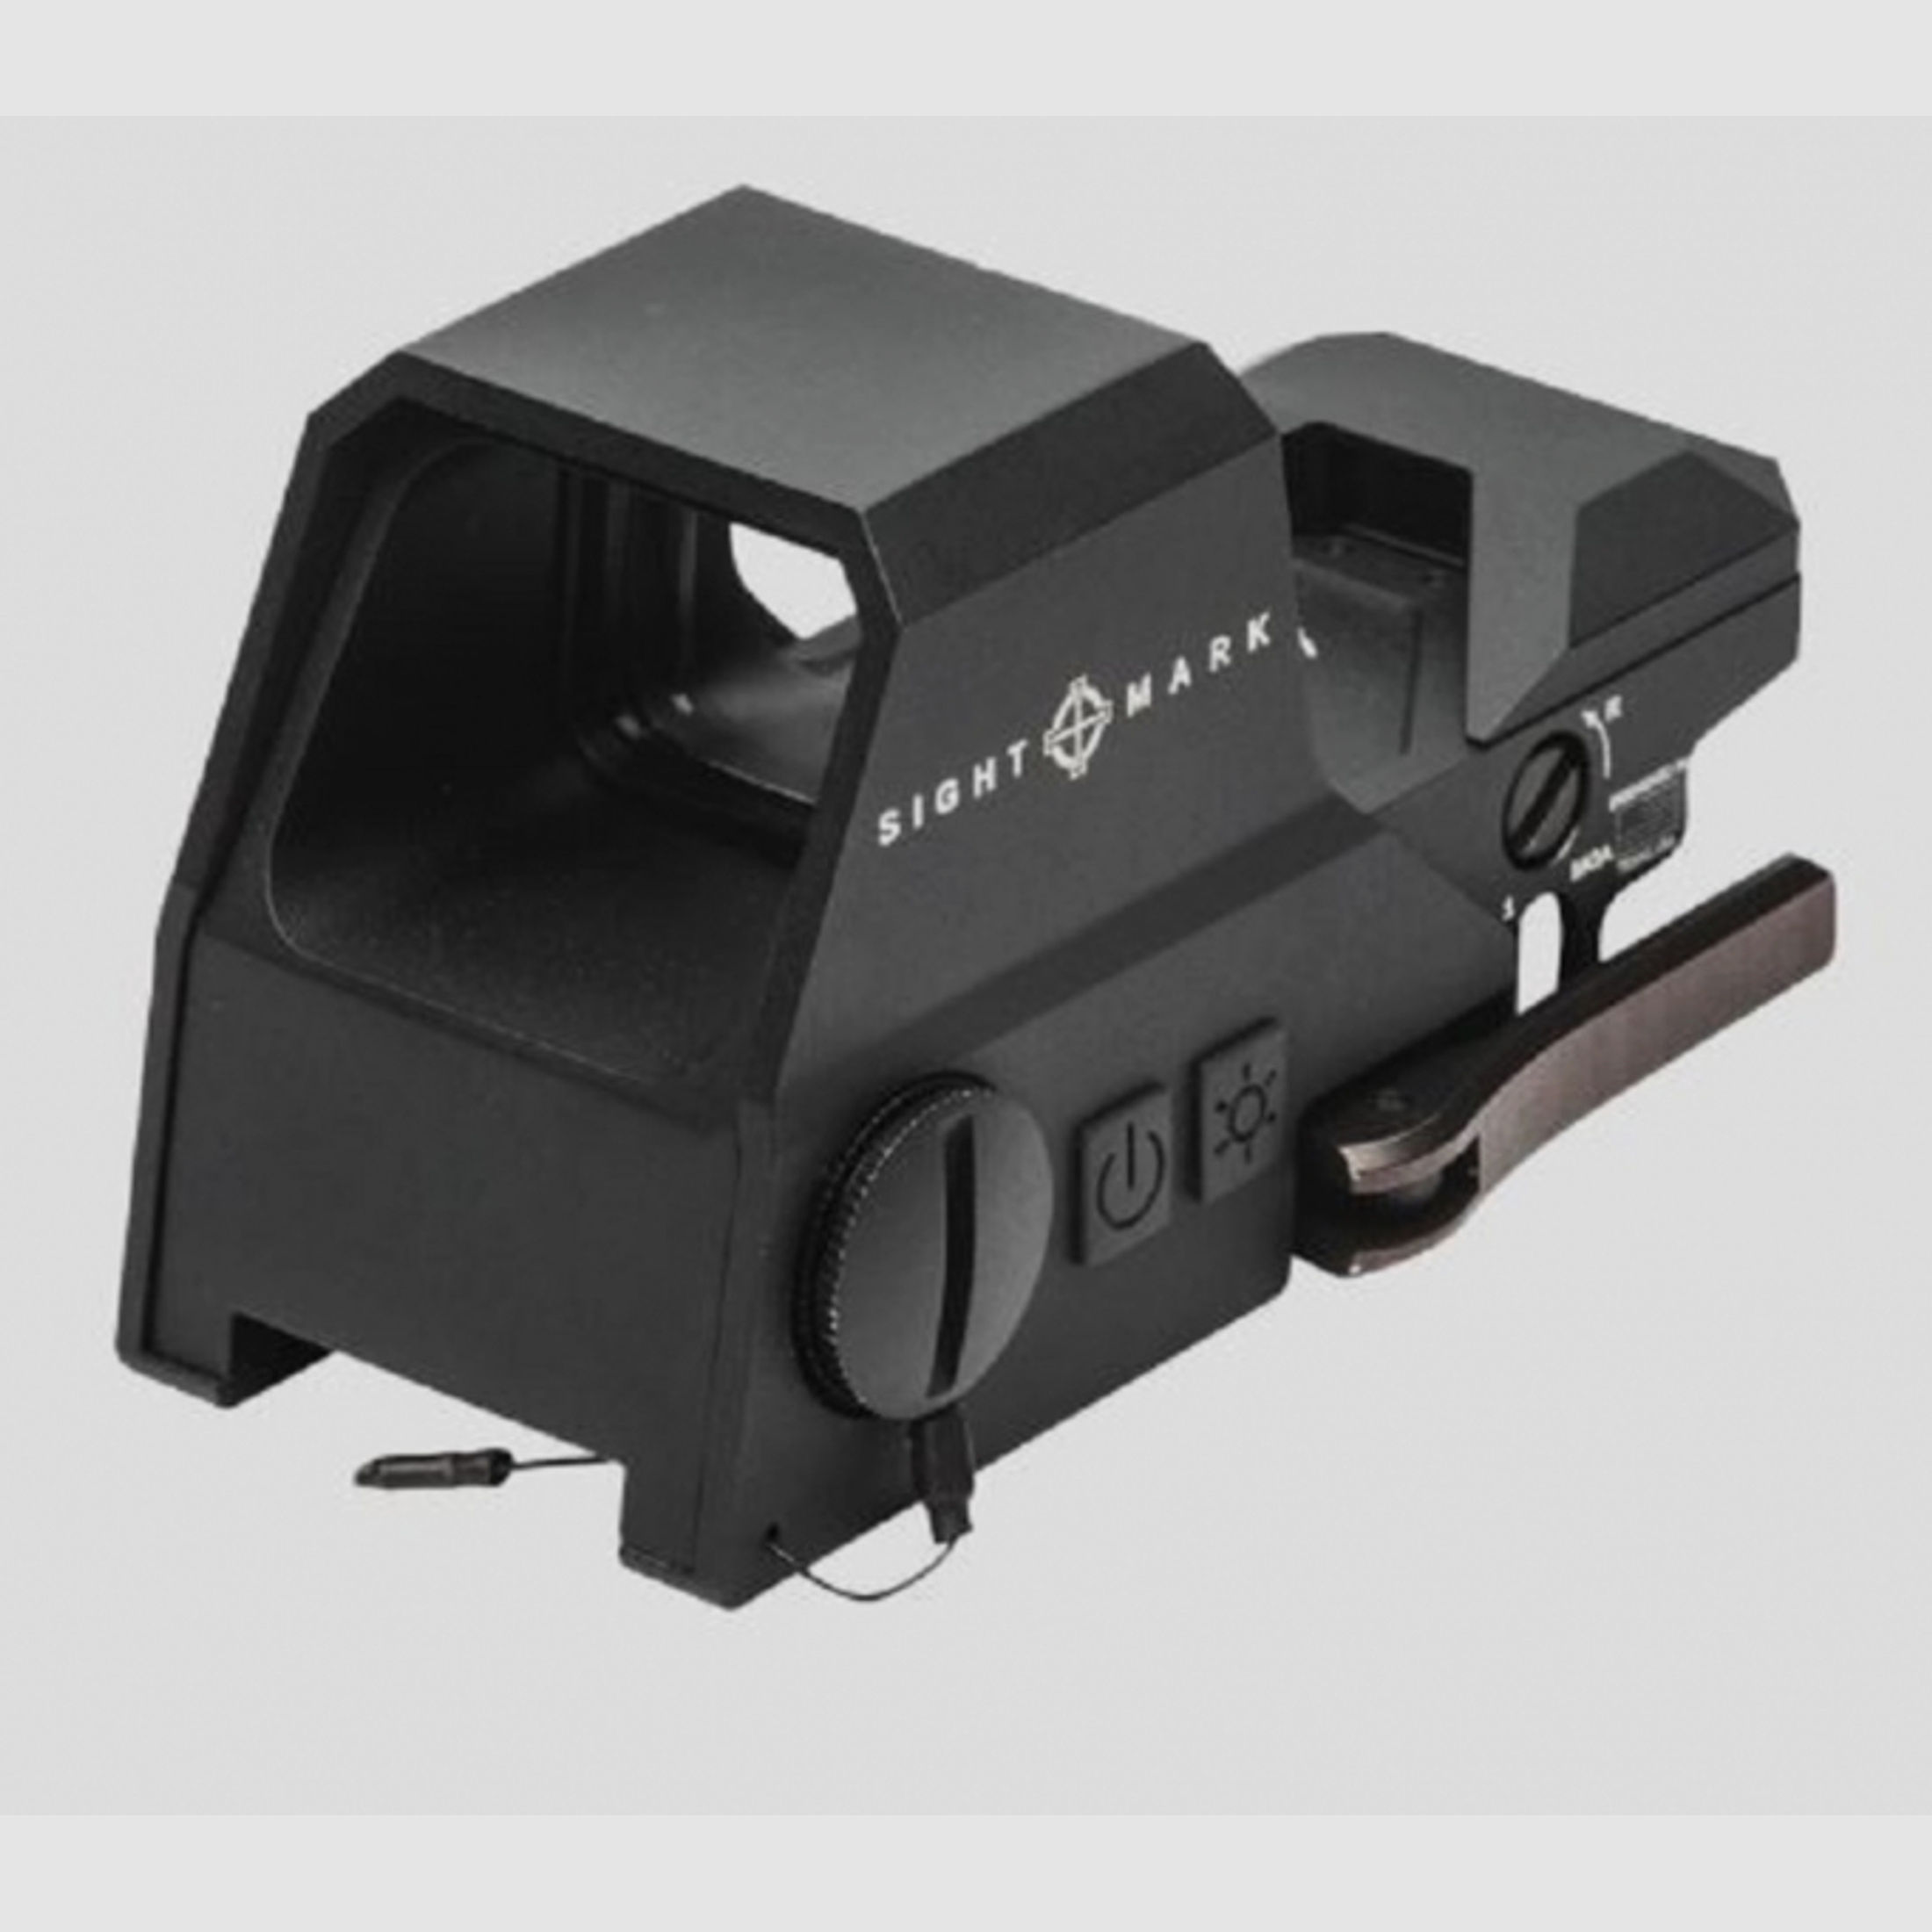 Sightmark - Leuchtpunktvisier Ultra Shot R-SPEC - für Erntejagd / Drückjagd